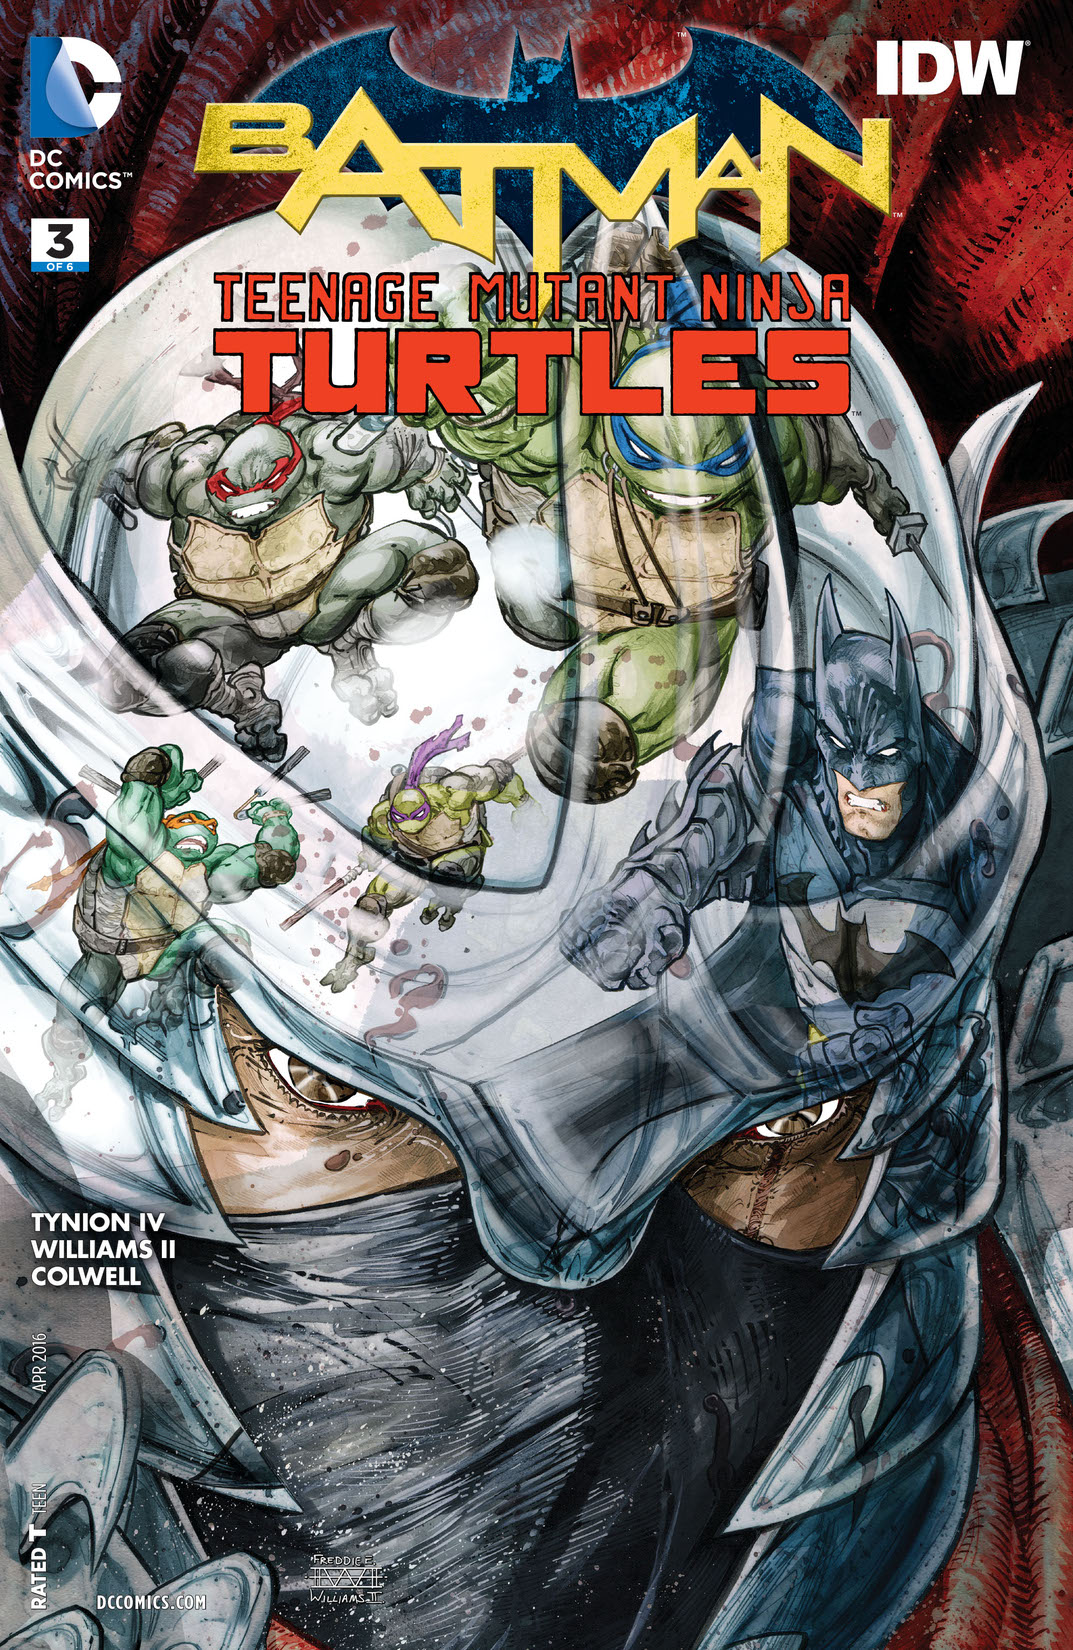 Batman/Teenage Mutant Ninja Turtles #3 preview images